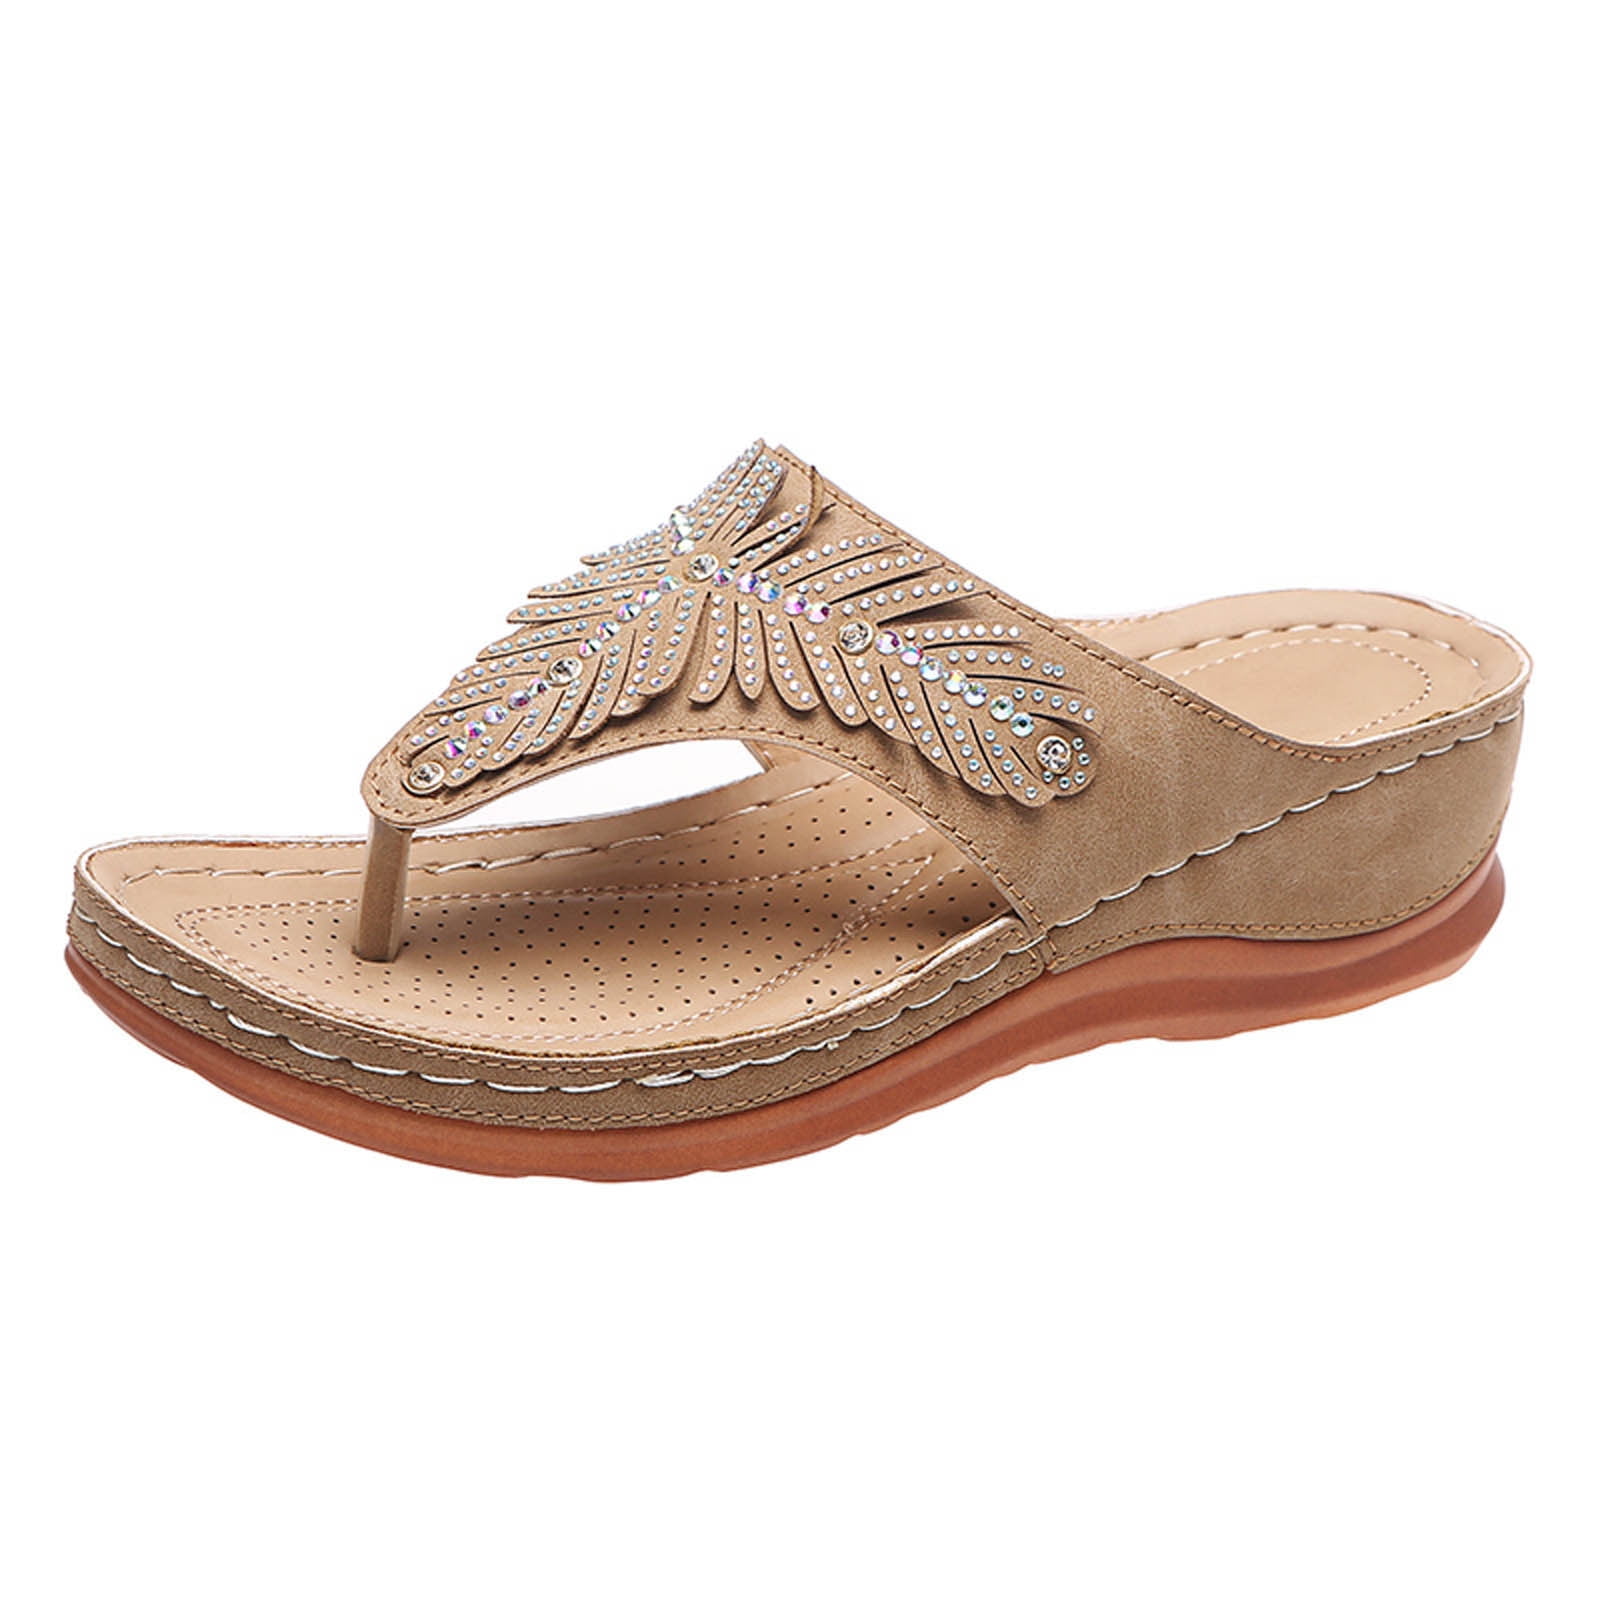 Utoimkio Flip Flops Sandals for Women Summer Beach Wedge Sandals for ...